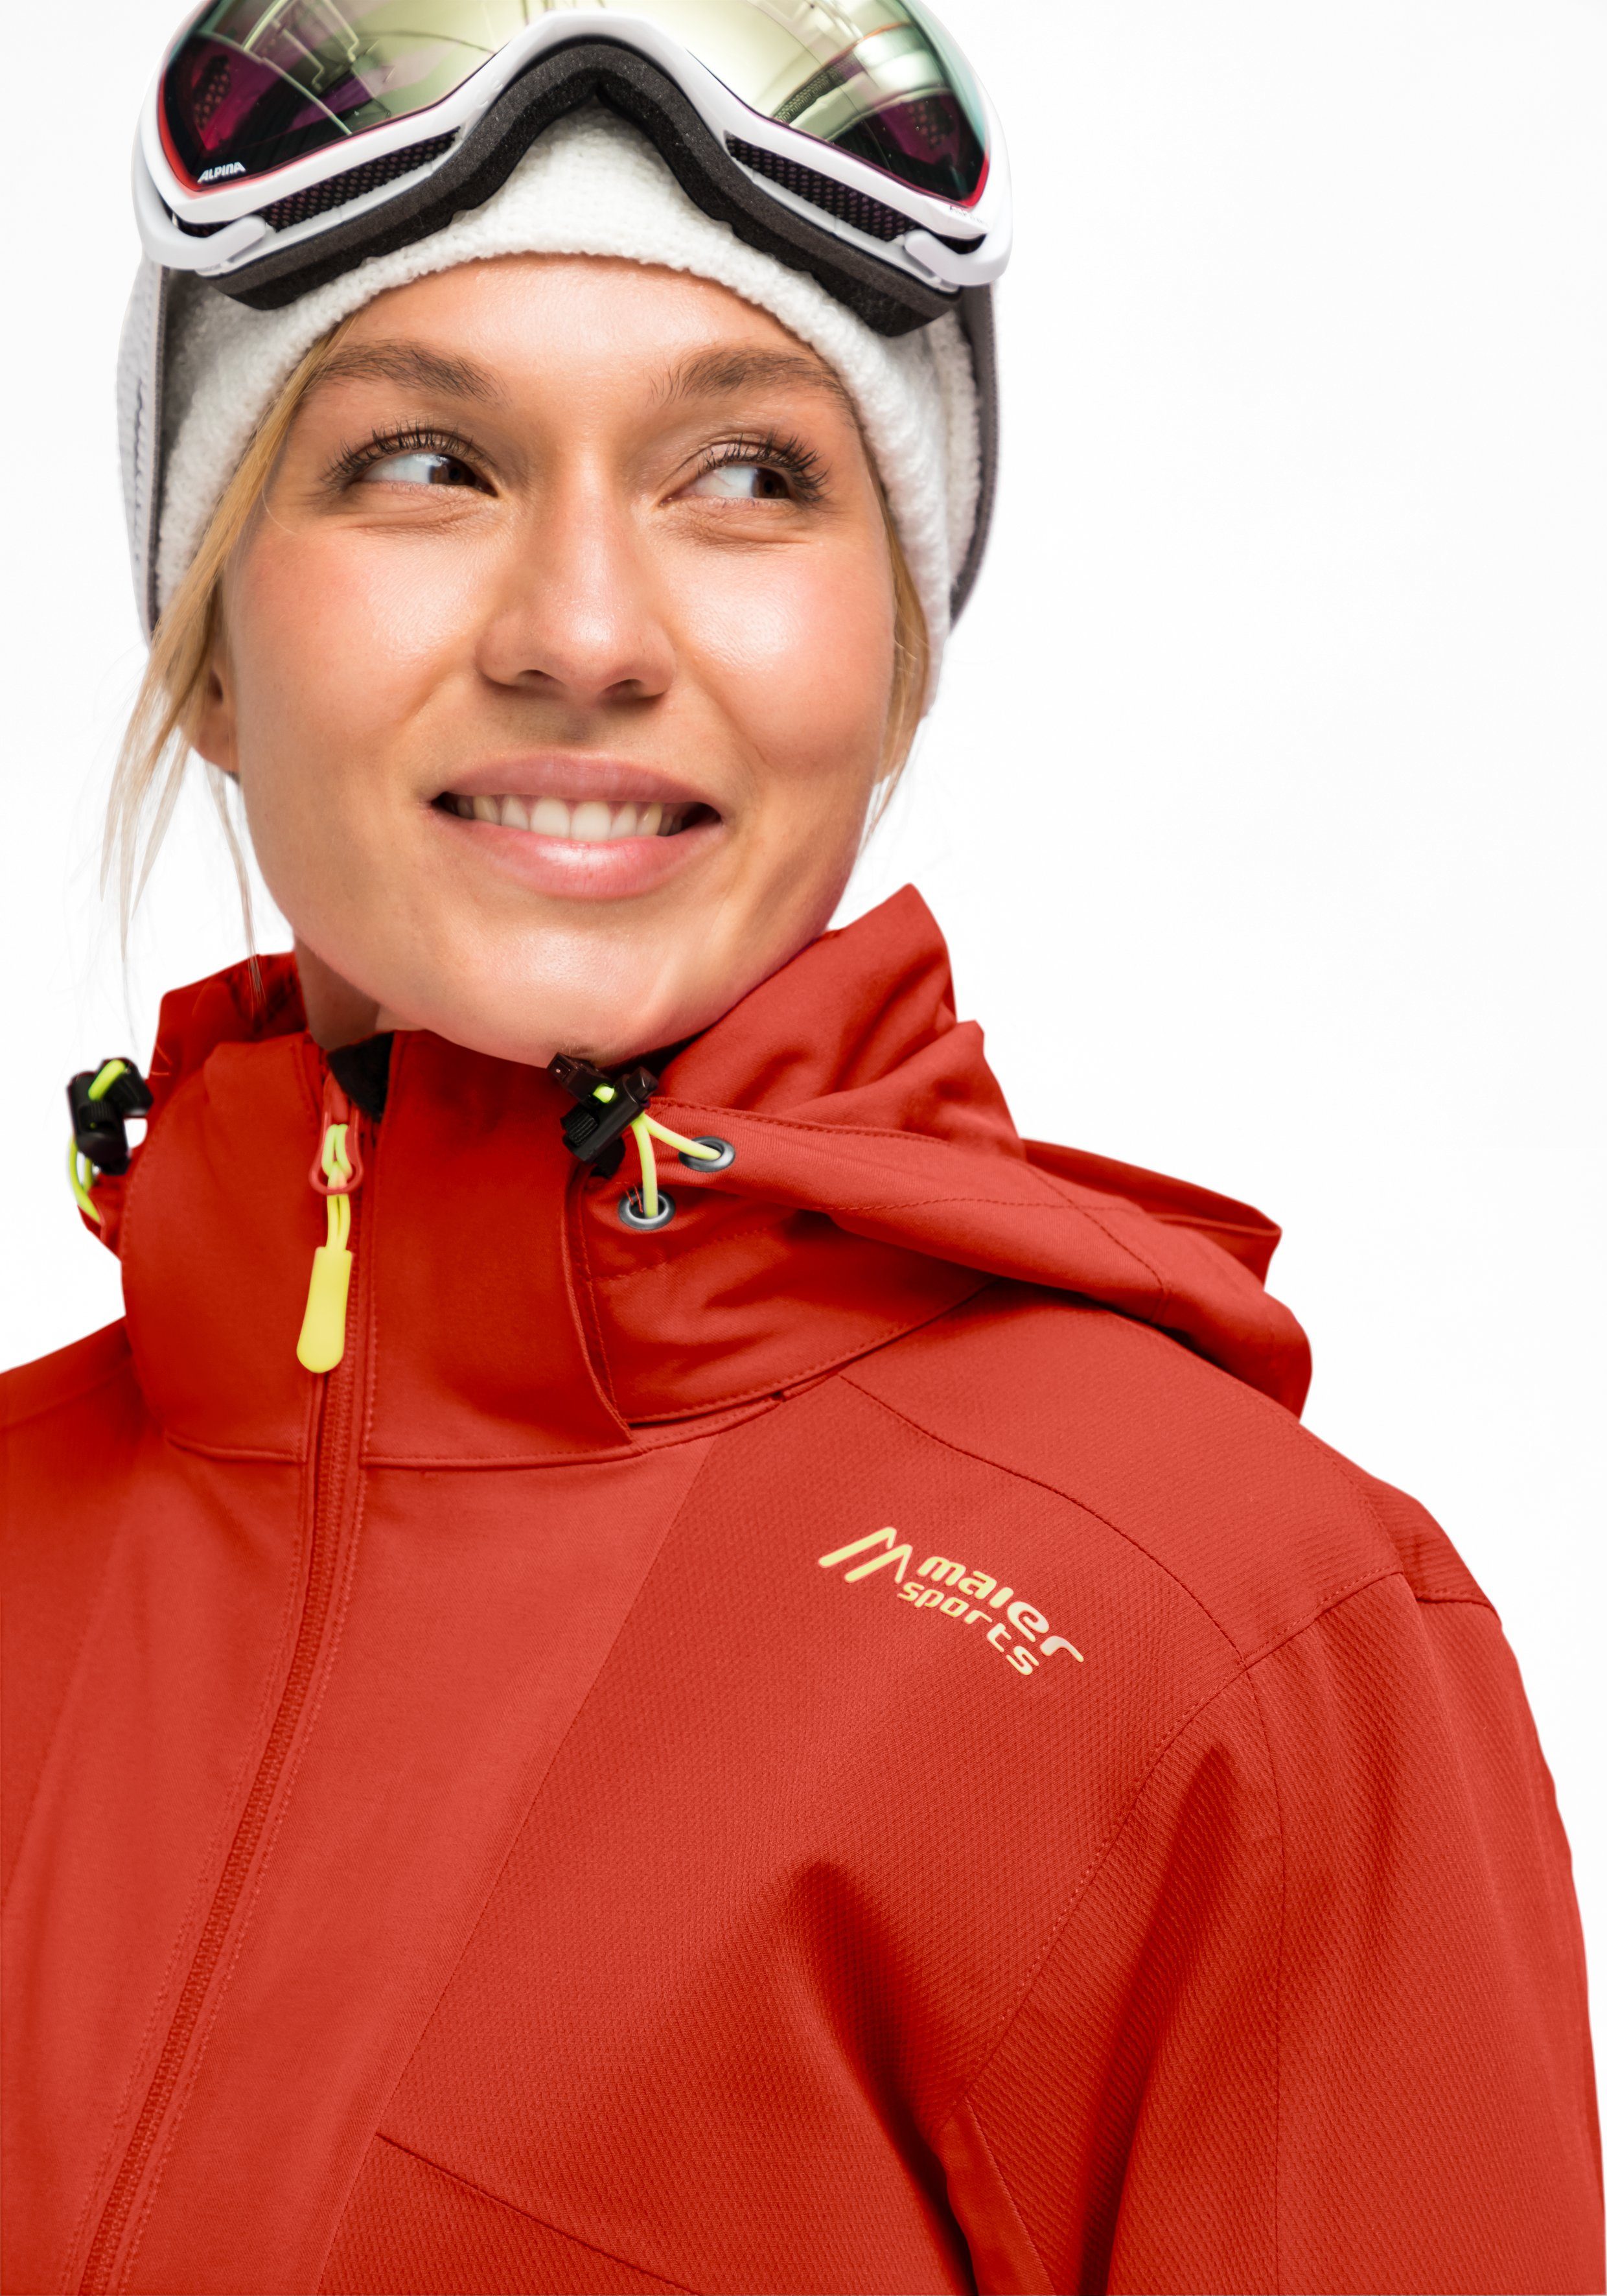 Maier designte Fast orangerot Piste Freeride Impulse Modern Sports Skijacke für perfekt W – Skijacke und